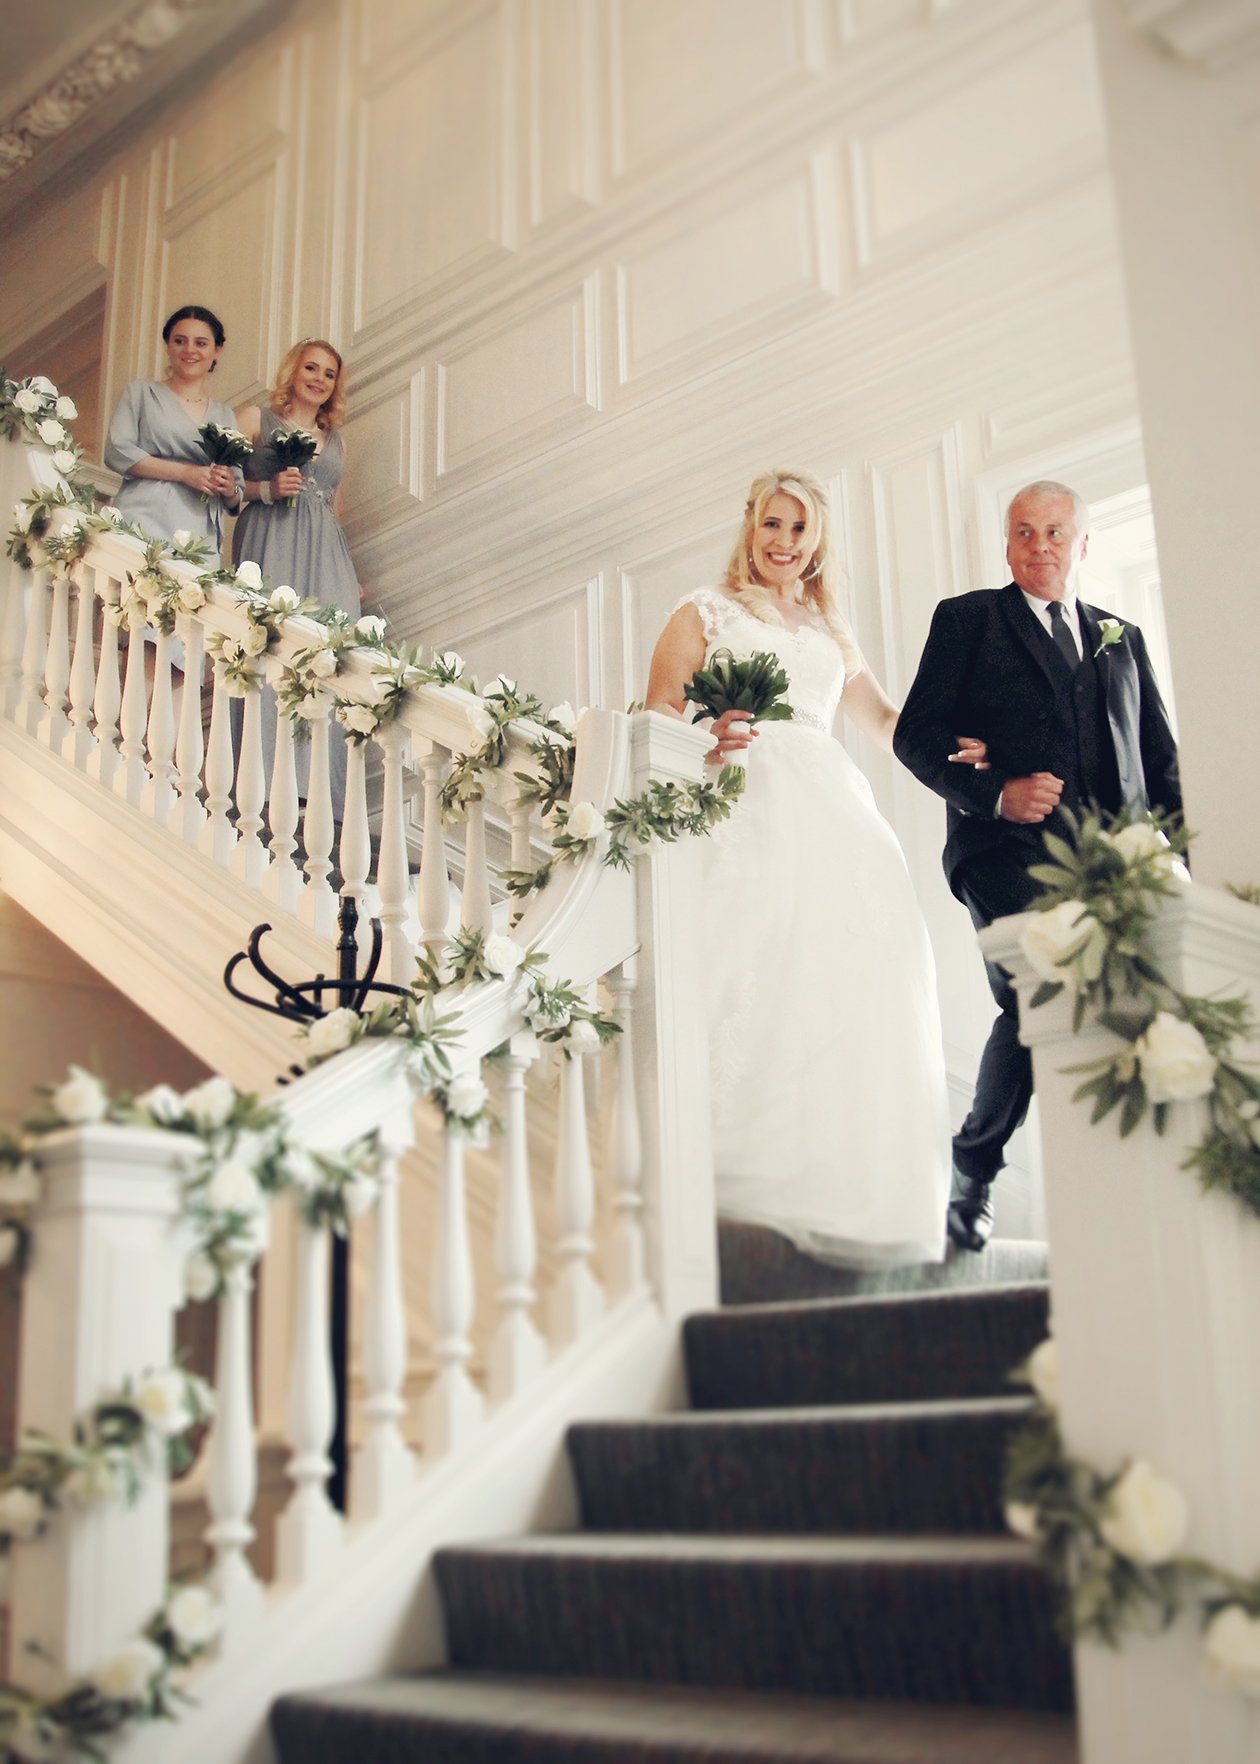 barnett hill hotel guildford - surrey wedding photography (6).jpg